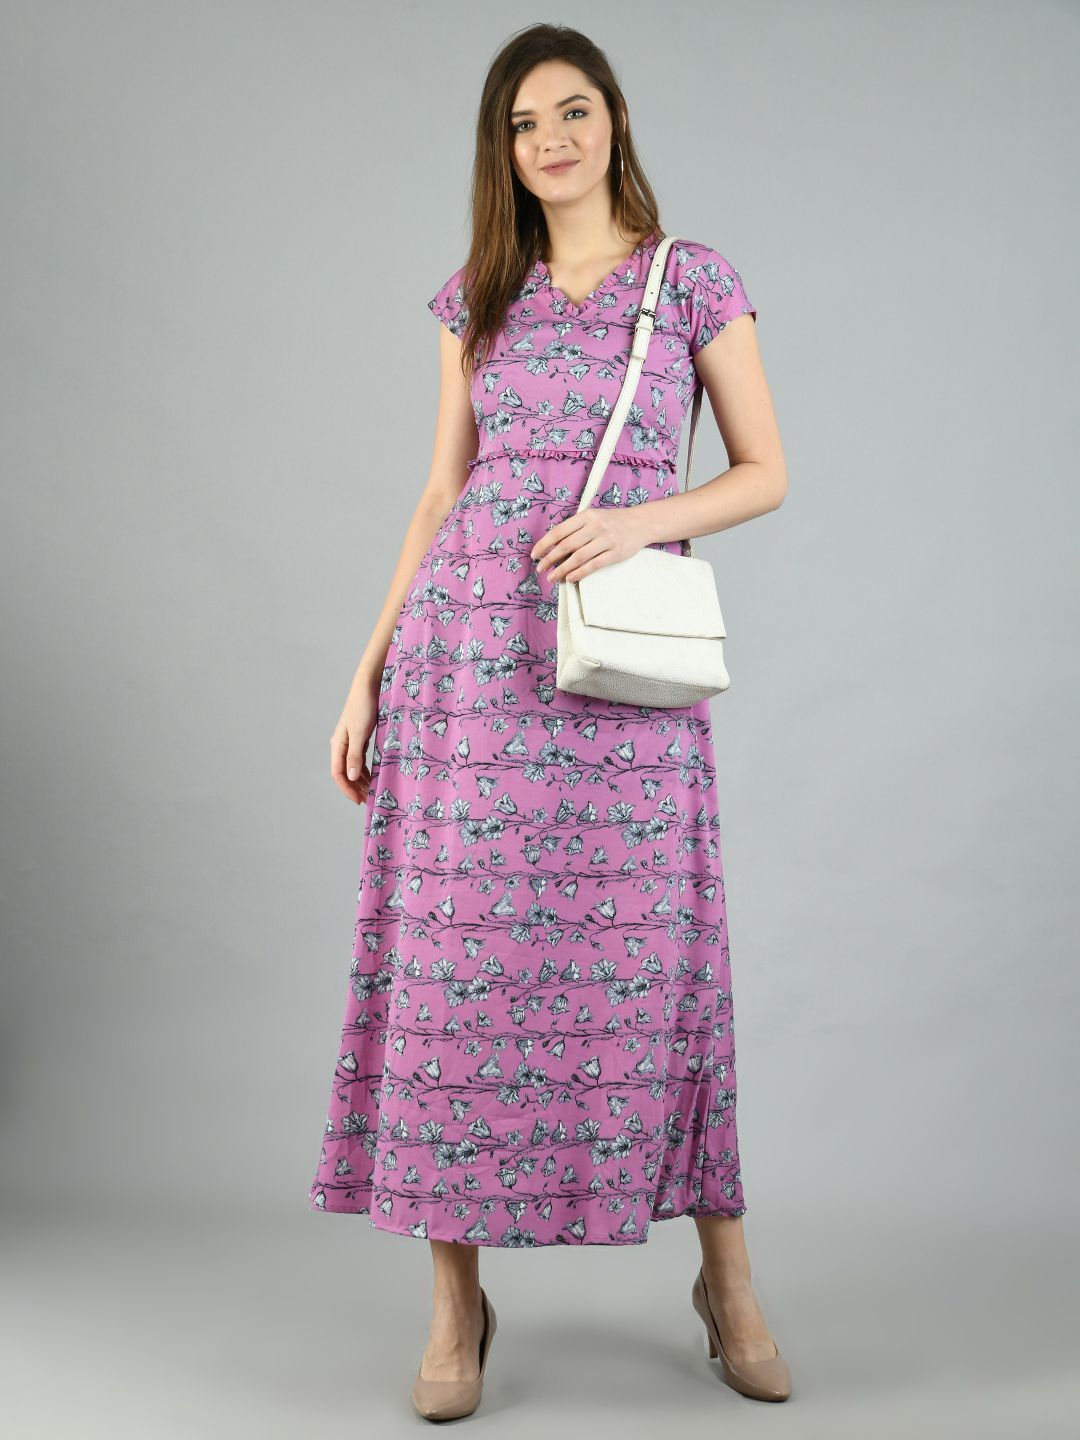 Women's Purple Polyester Printed Short Sleeve V Neck Casual Dress - Myshka